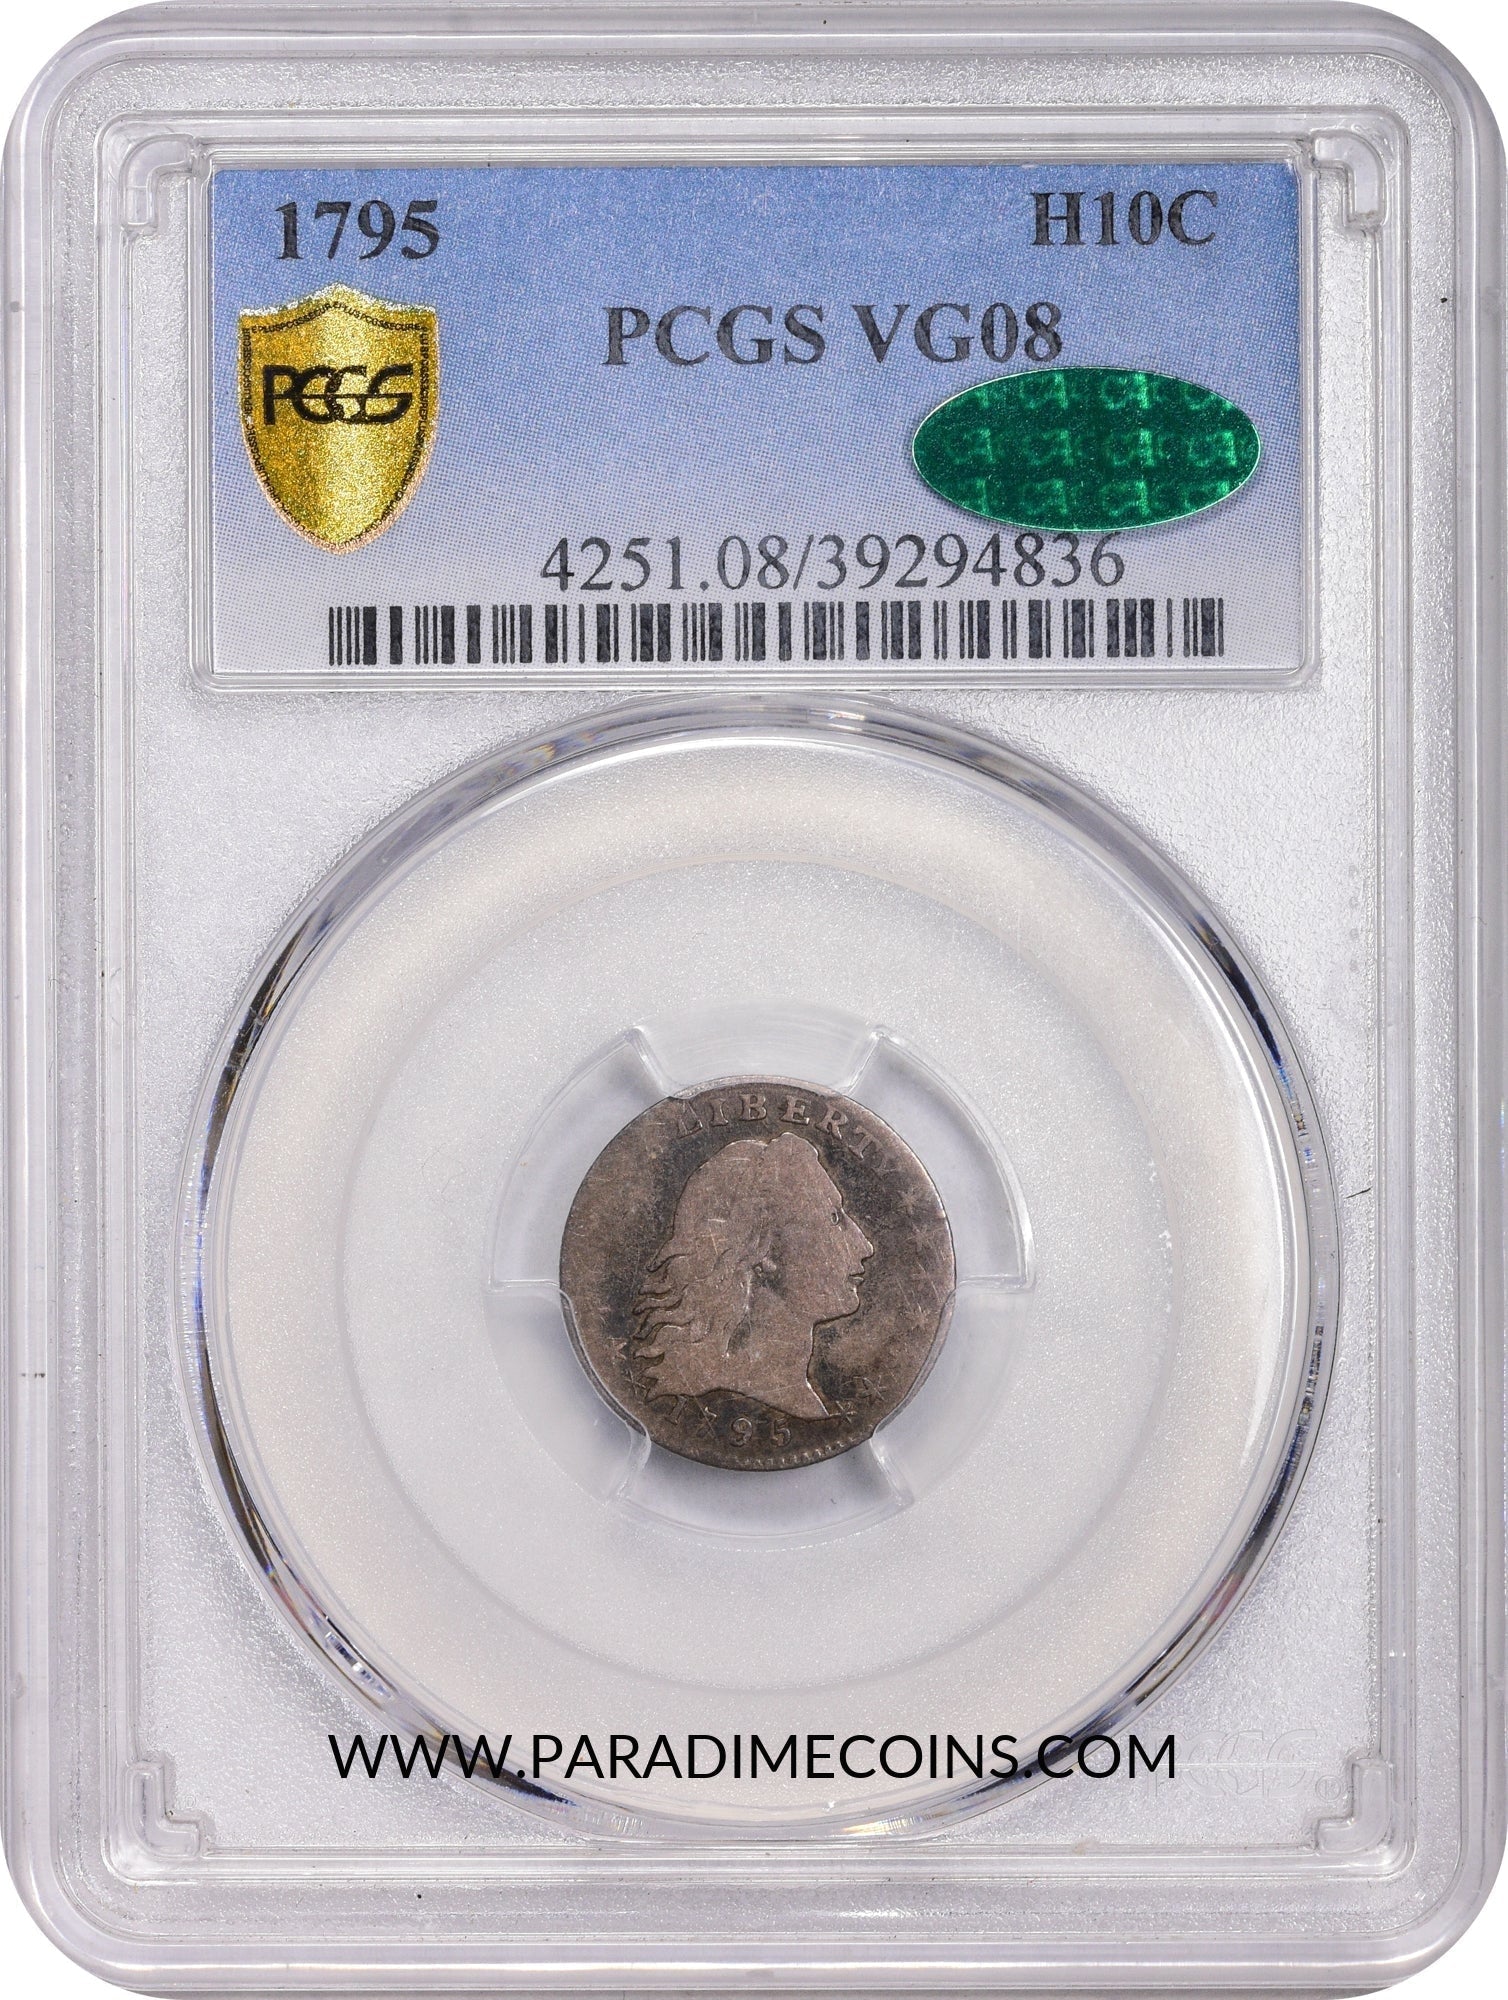 1795 H10C VG08 PCGS CAC - Paradime Coins | PCGS NGC CACG CAC Rare US Numismatic Coins For Sale